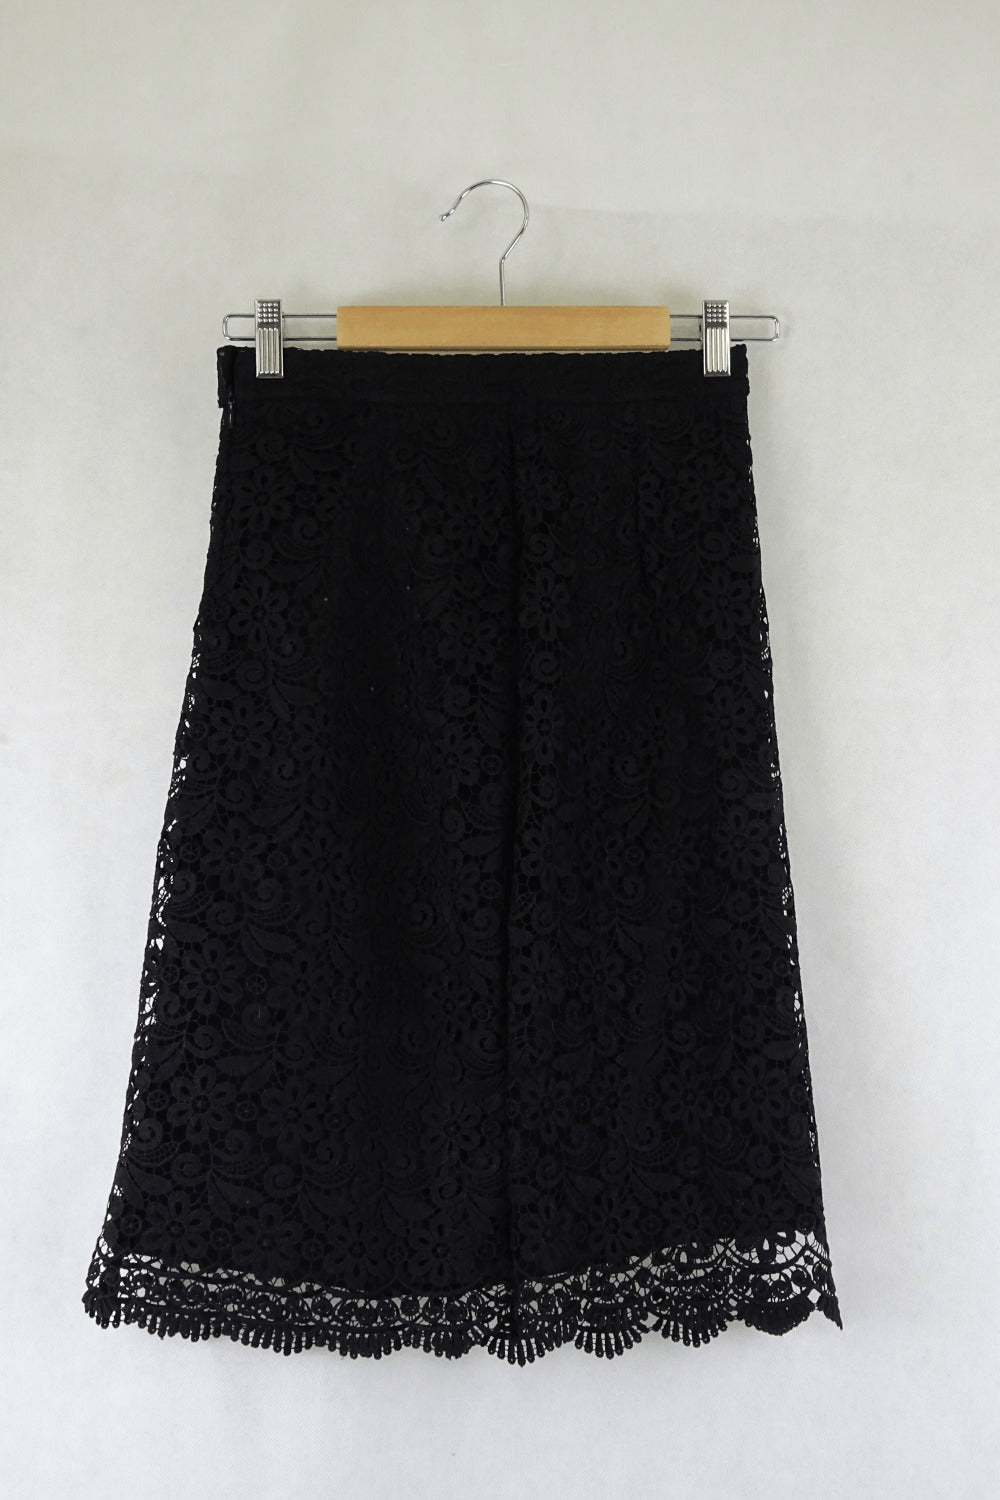 Uniqlo Lace Black Skirt S